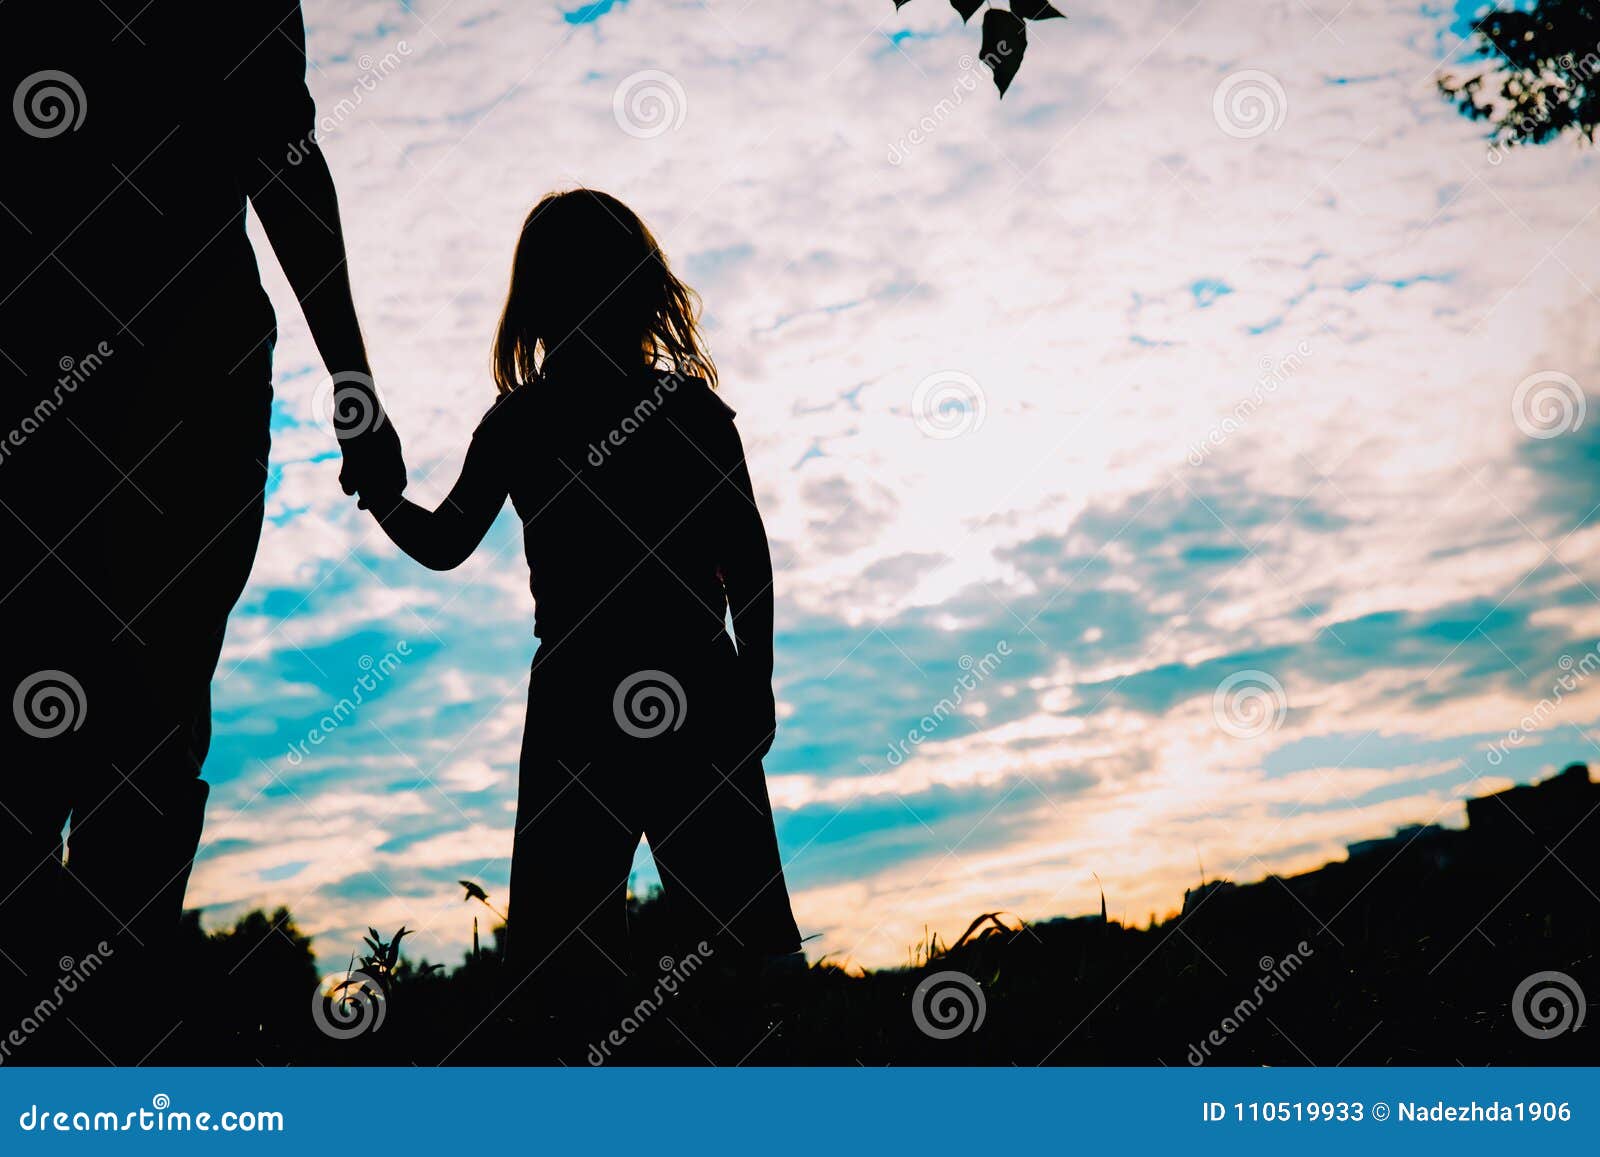 Рука отца и дочери. Девочка на руках отца. Папа держит дочь на руках. Отец с дочкой на руках.